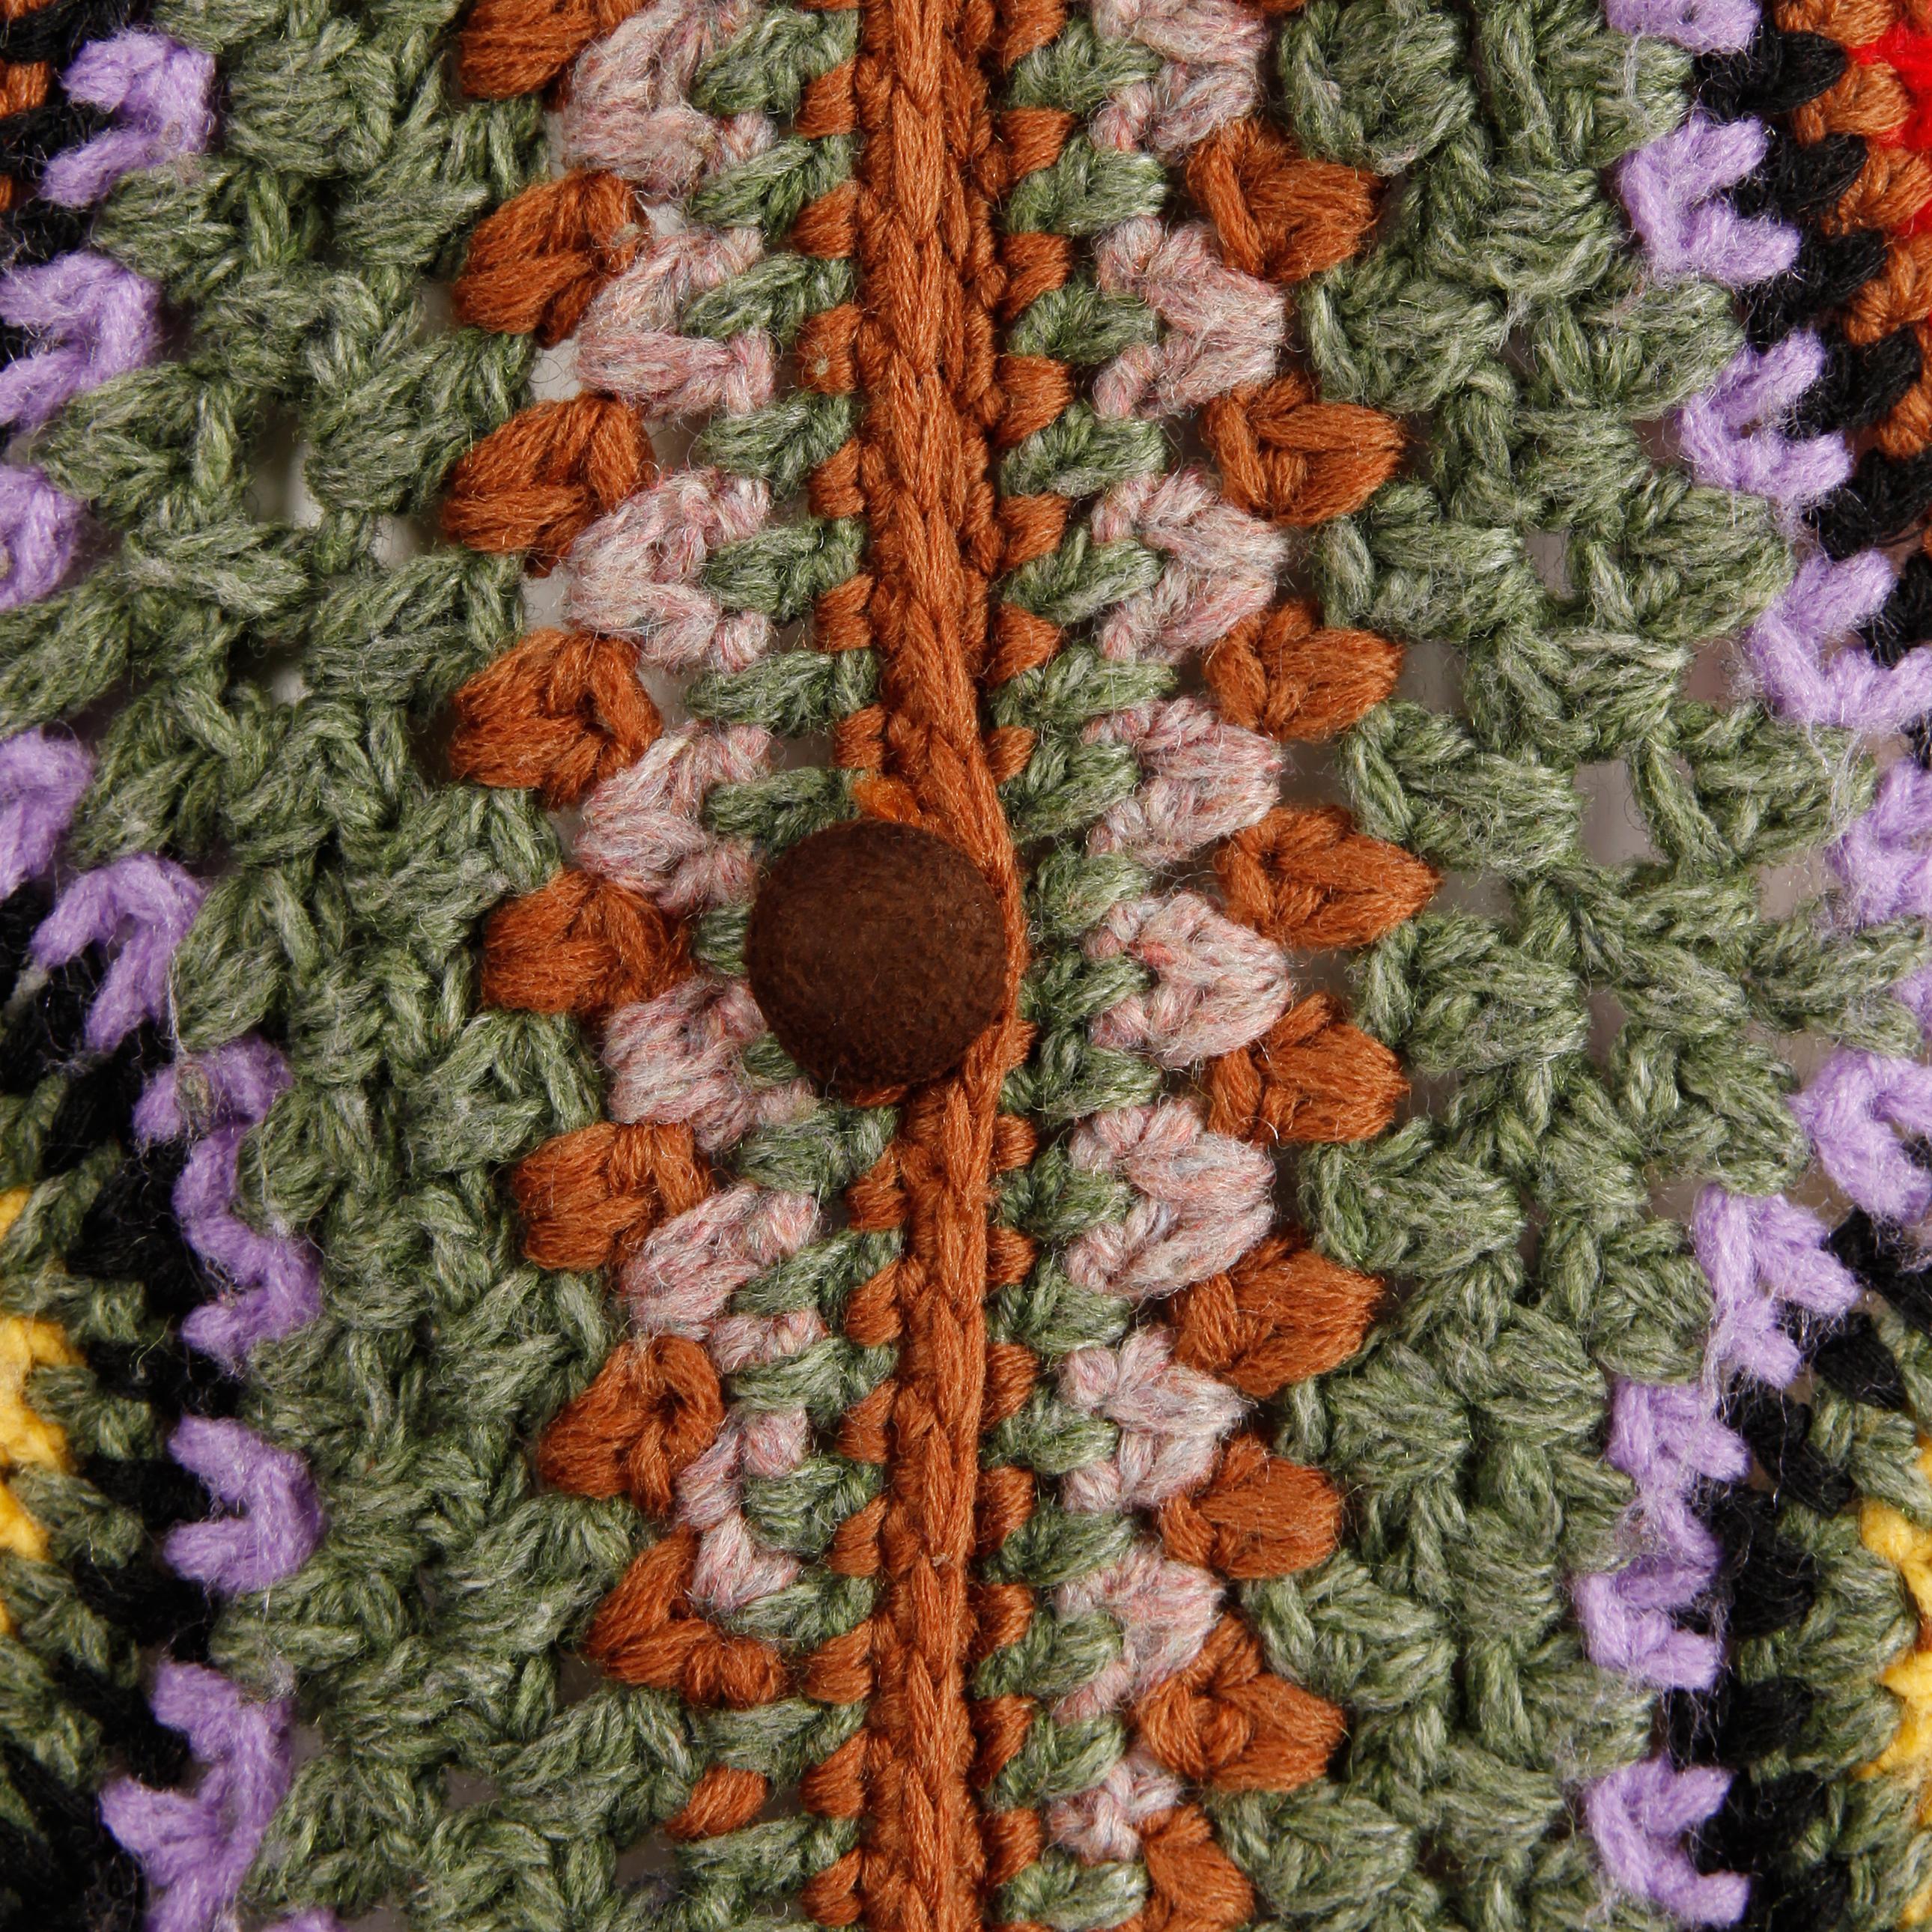 Brown Incredible 1970s Vintage Hippie Boho Crochet Wool + Suede Leather Vest Jacket